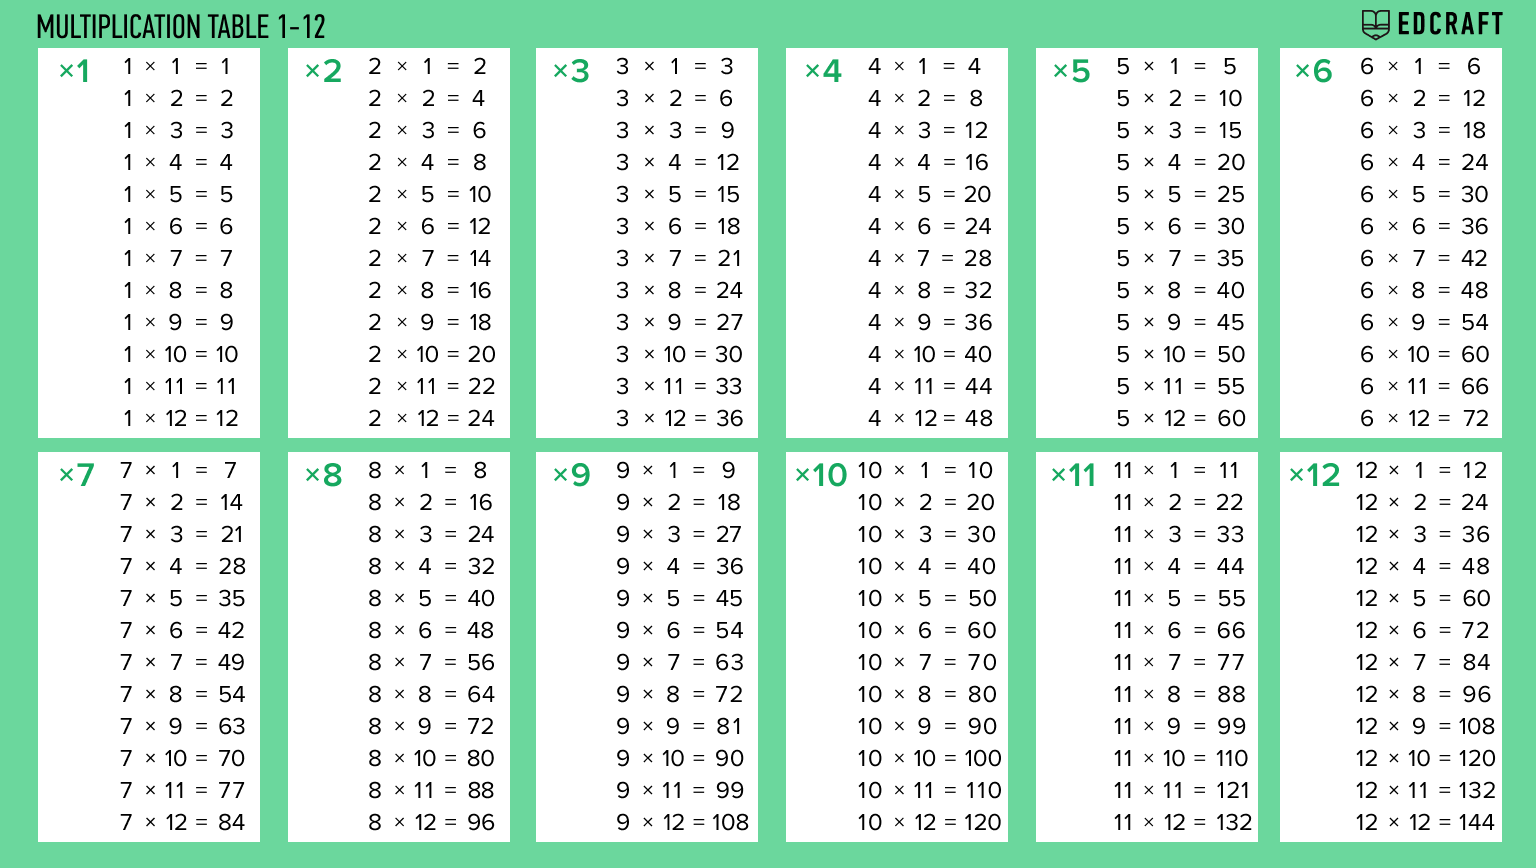 printable multiplication charts